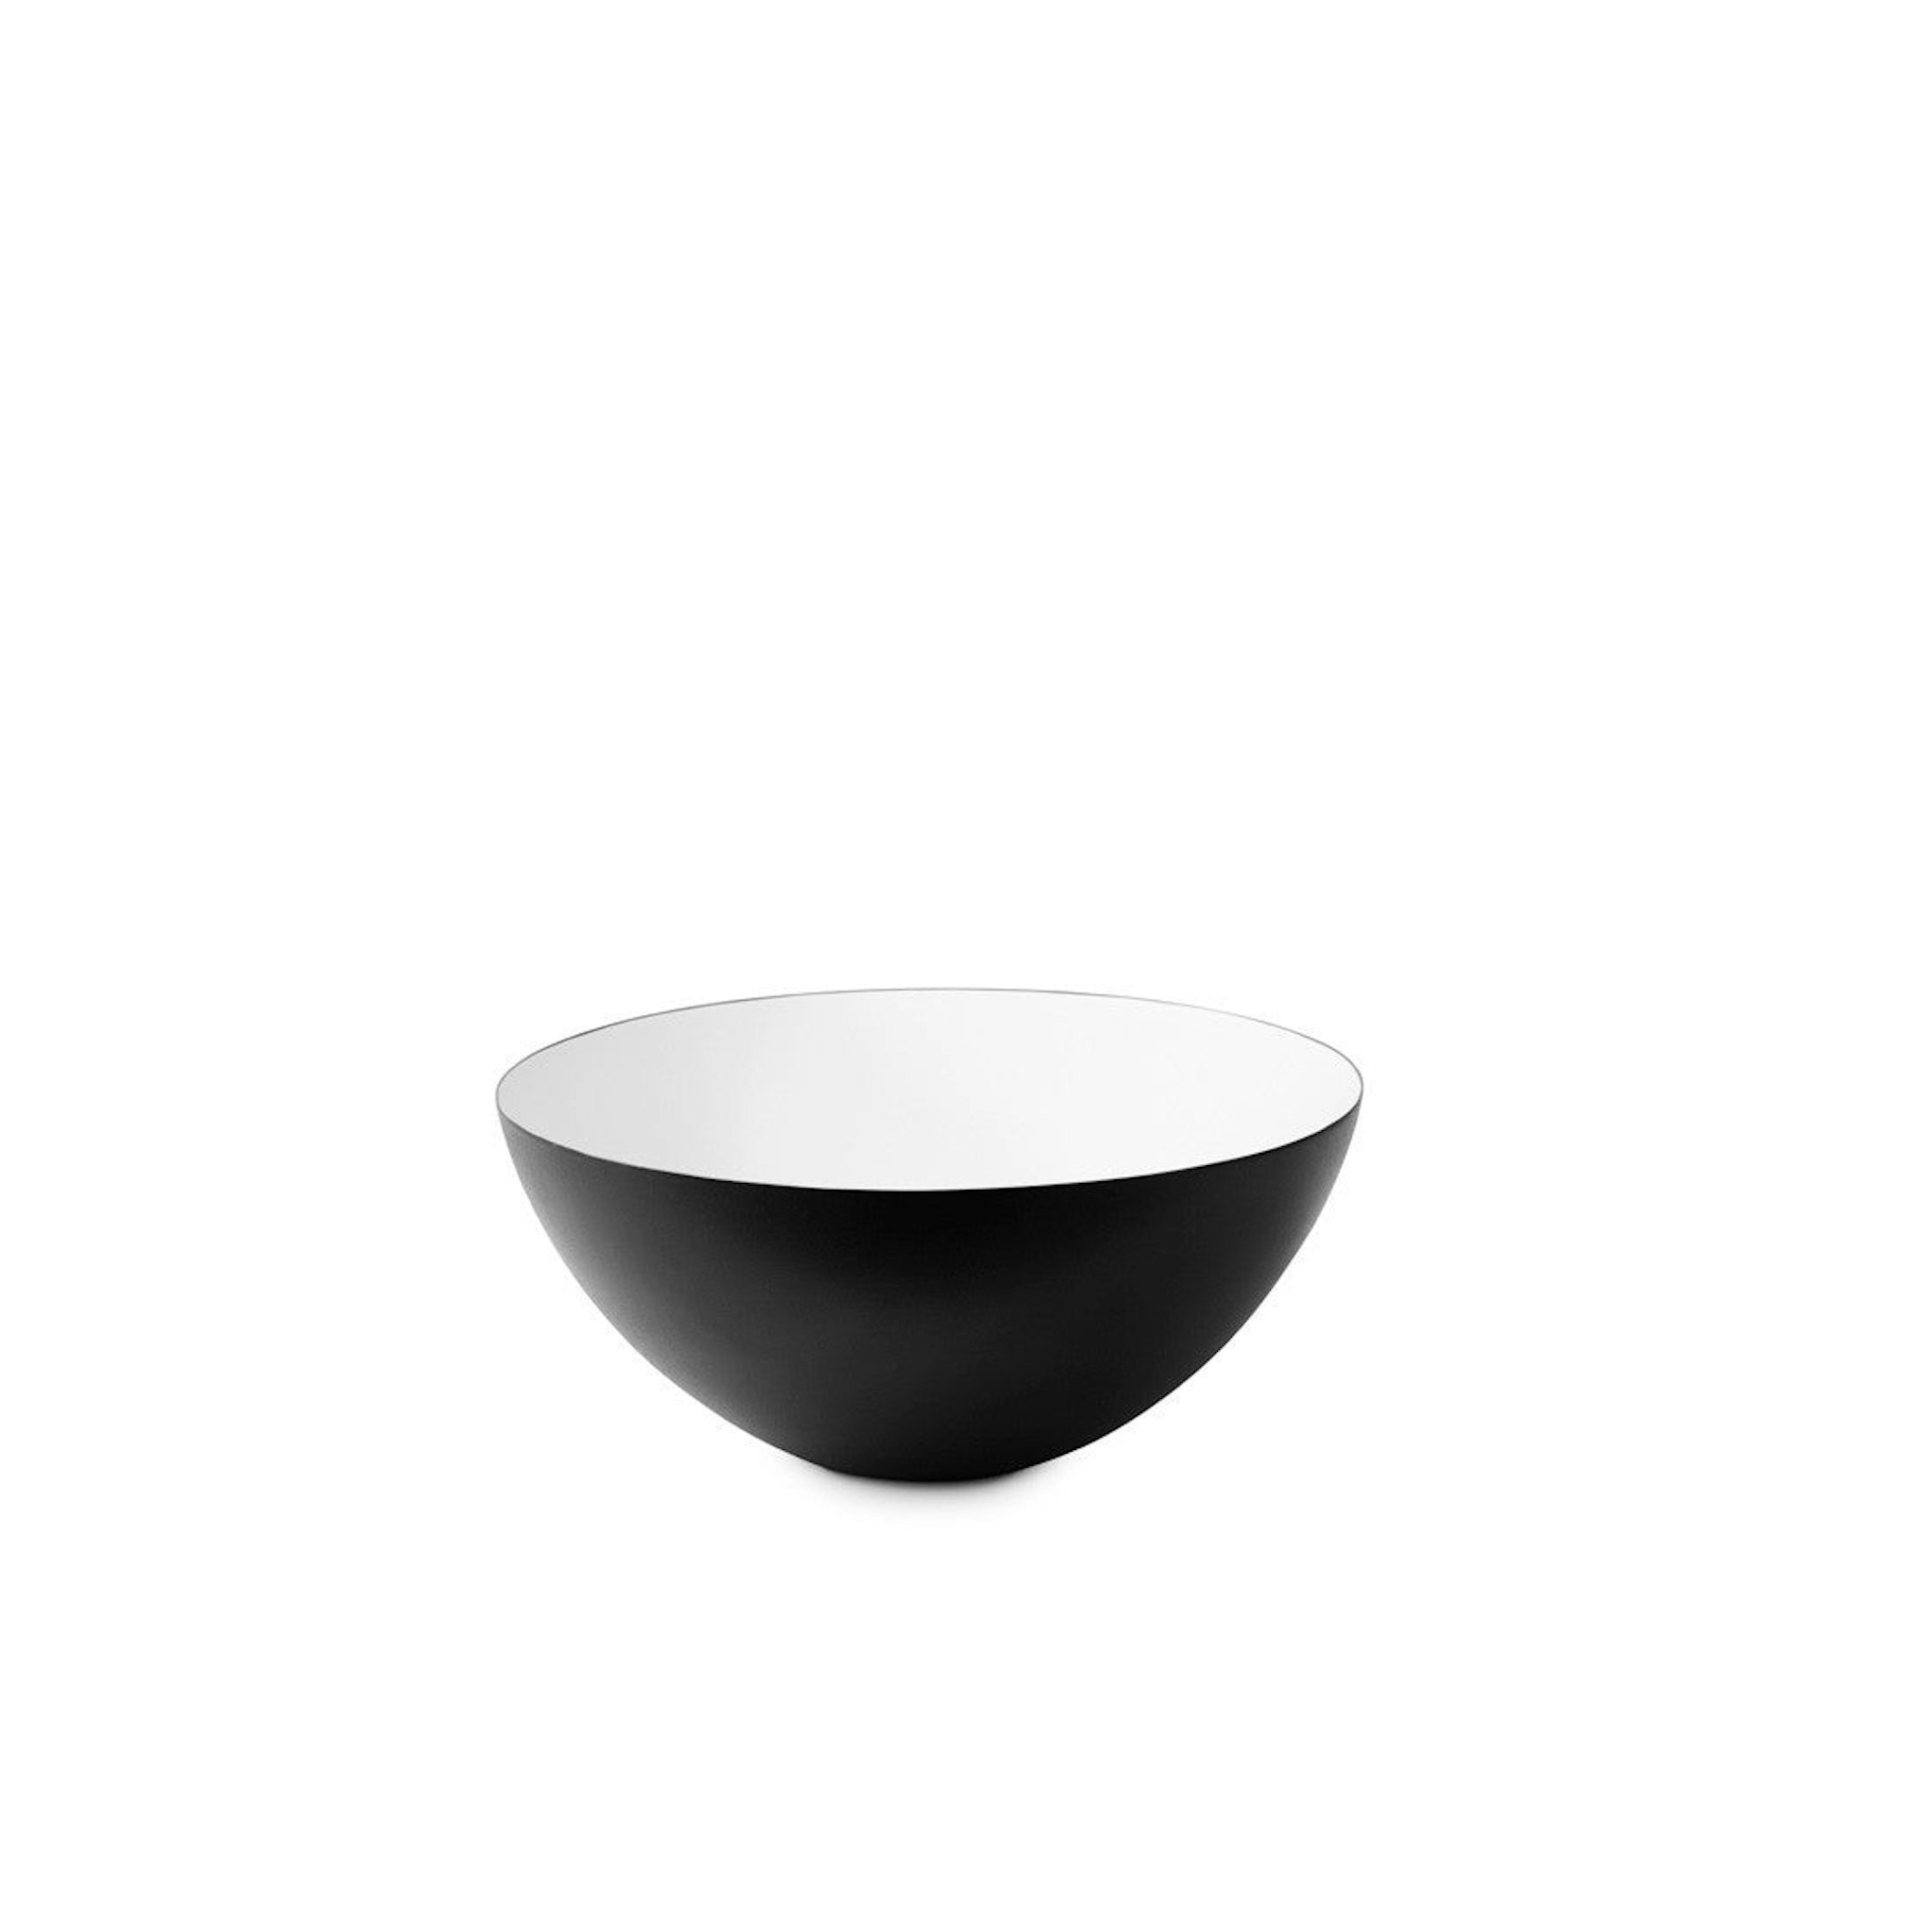 Krenit Bowl Small Ø12.5cm by Normann Copenhagen